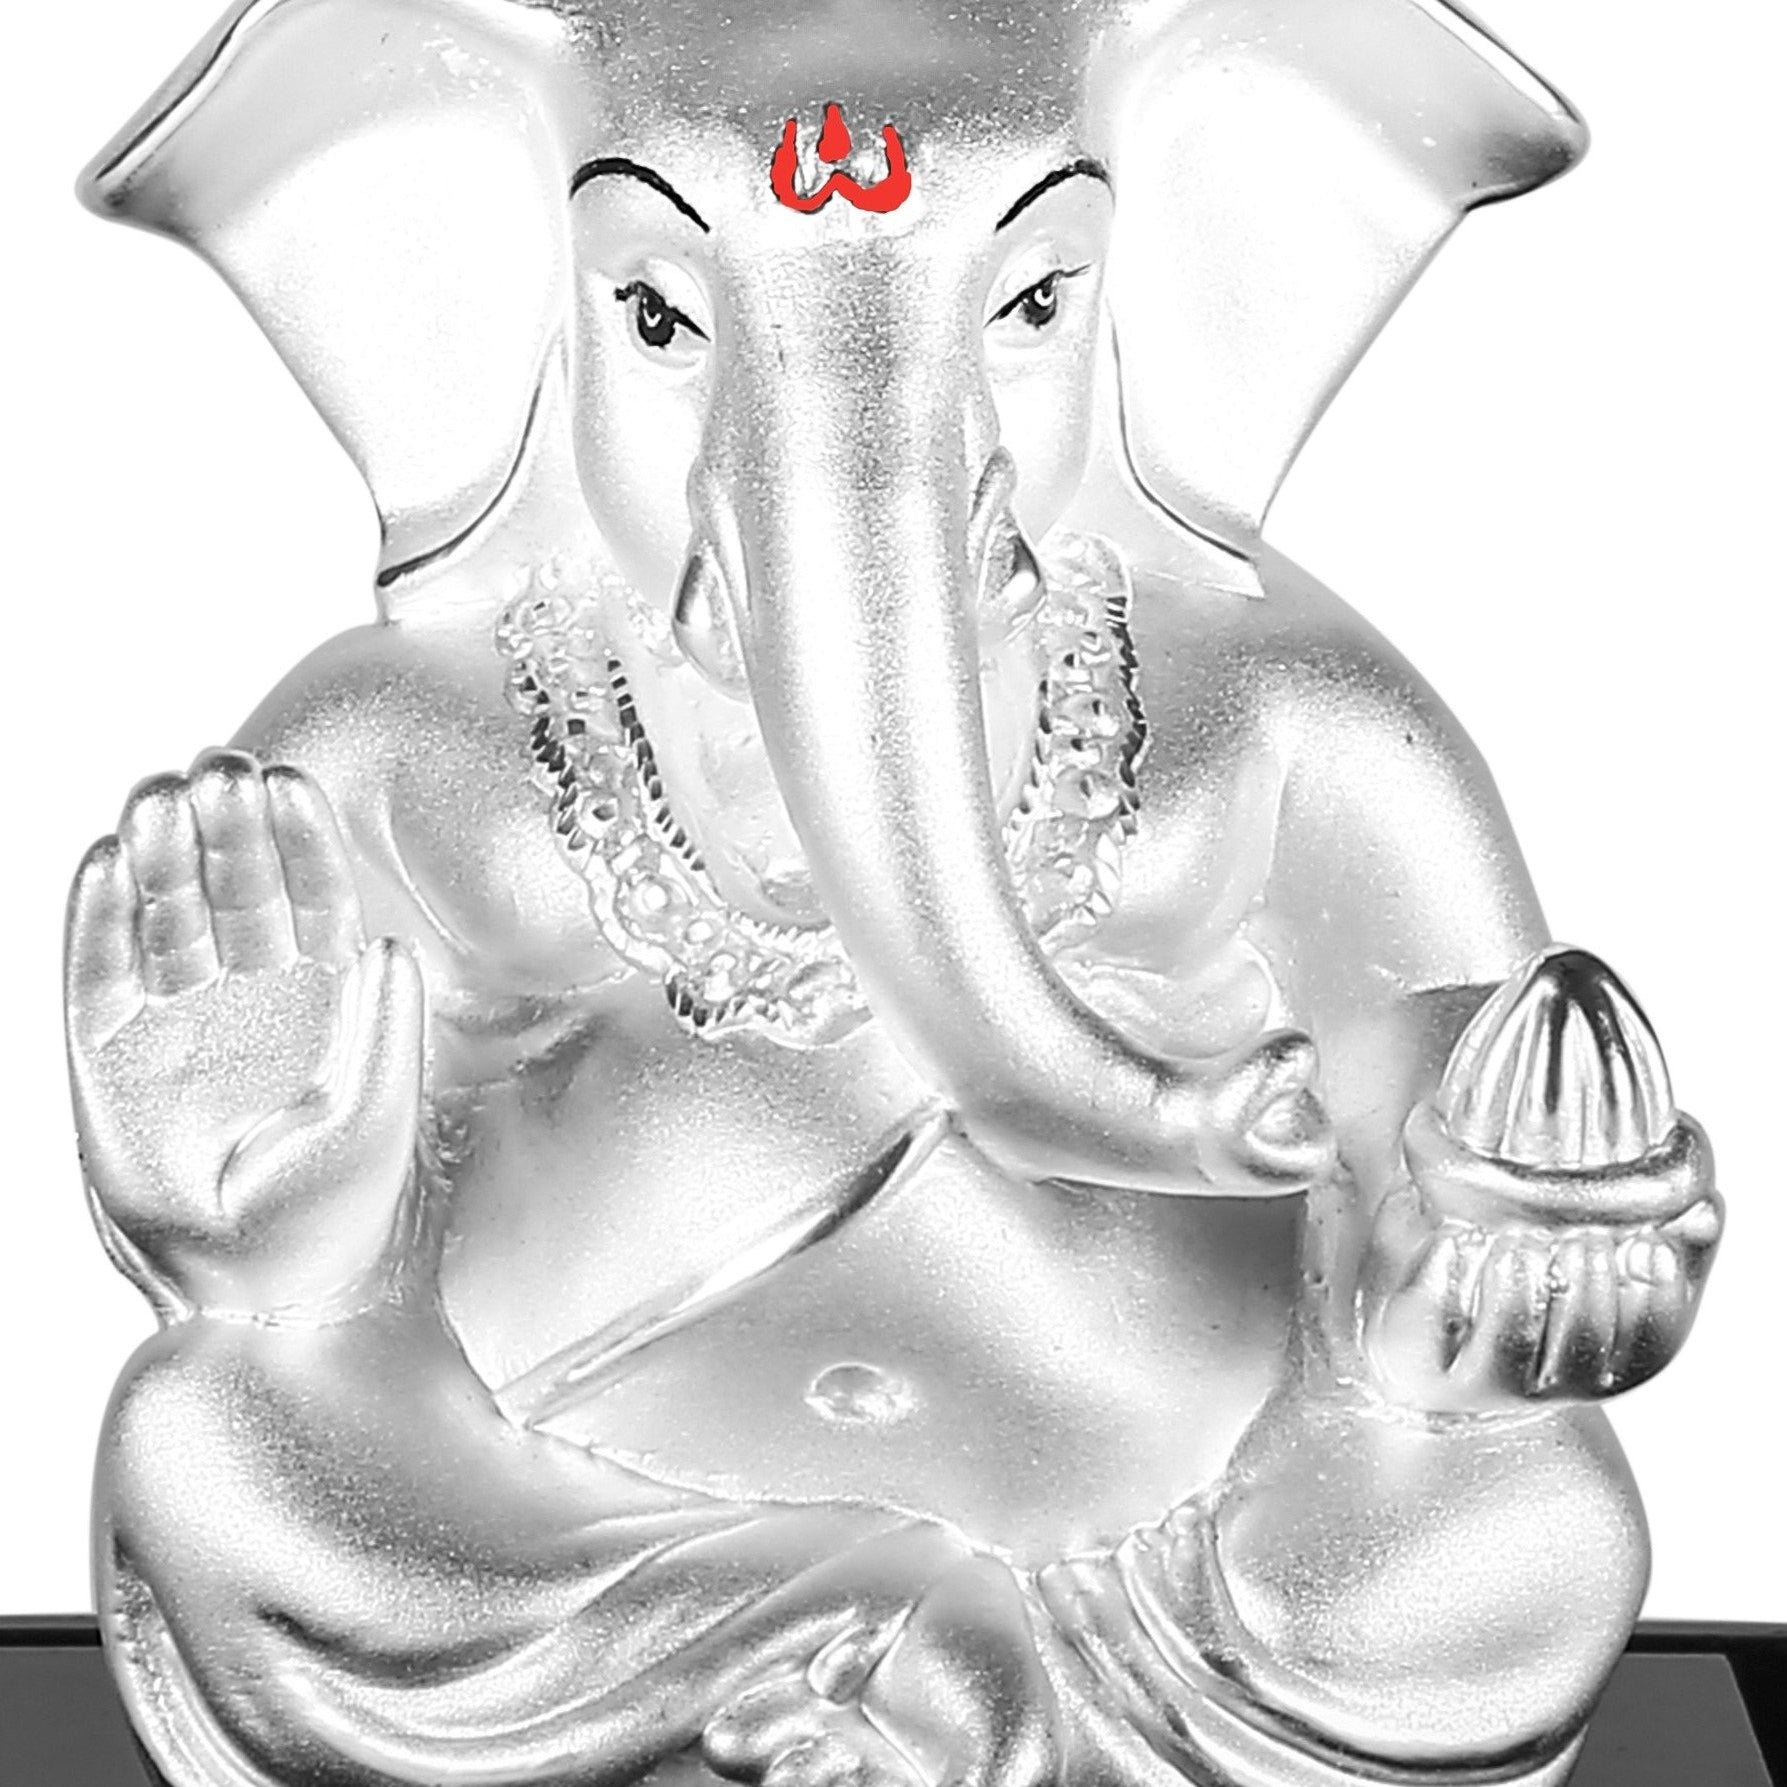 999 Pure Silver Ganesha Idol By Krysaliis Isvara - Krign_05 Idols